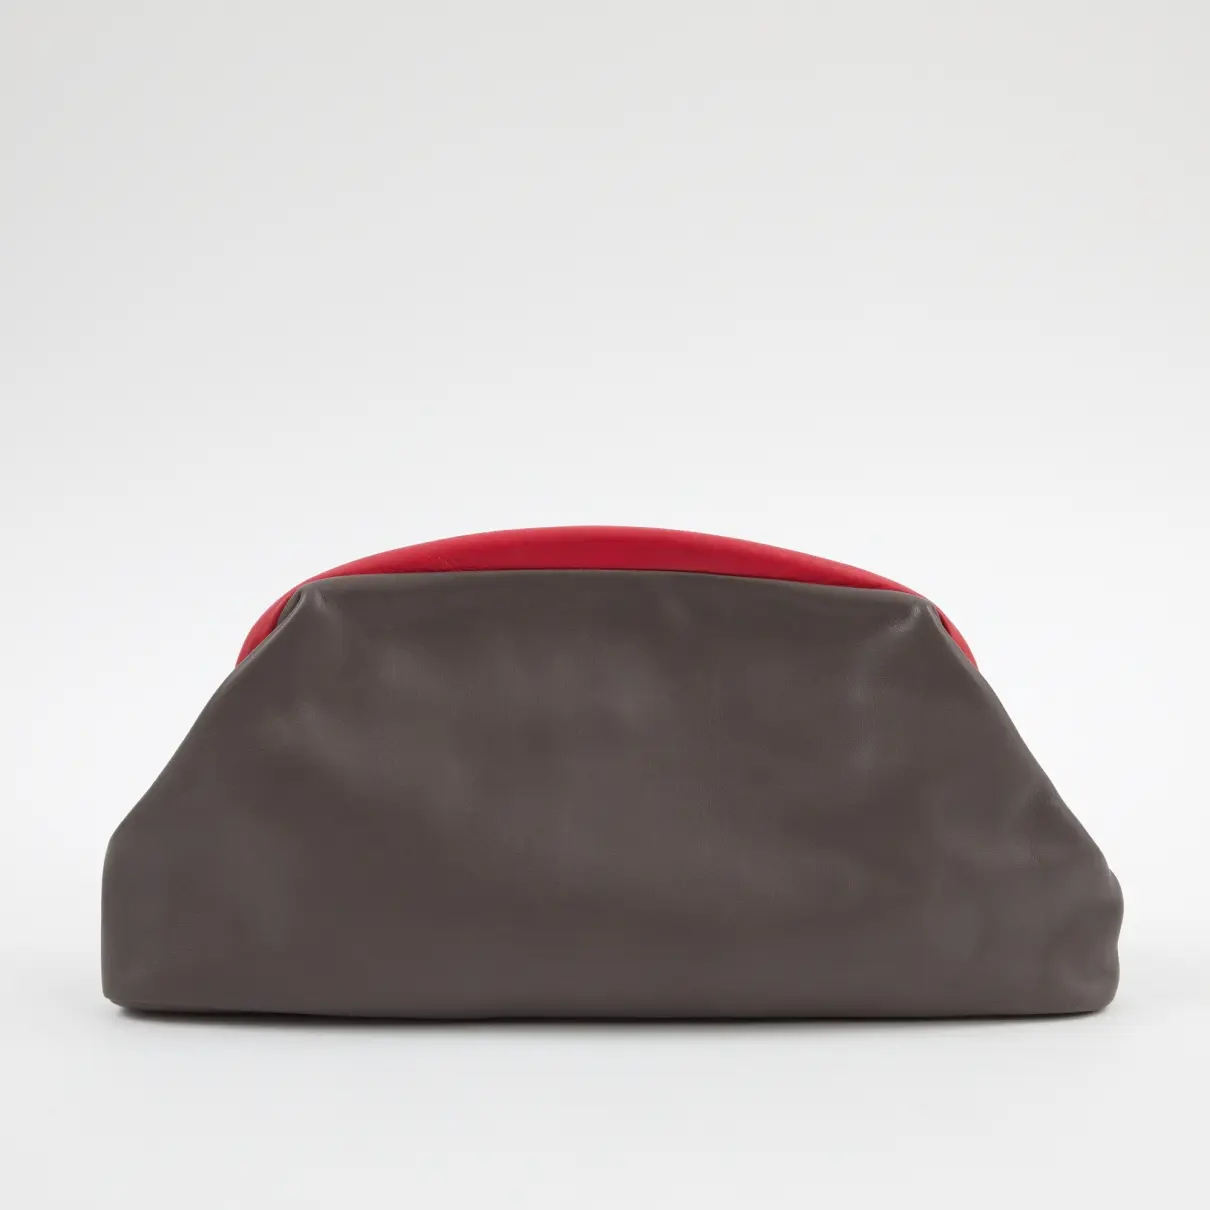 Buy Emporio Armani Leather clutch bag online